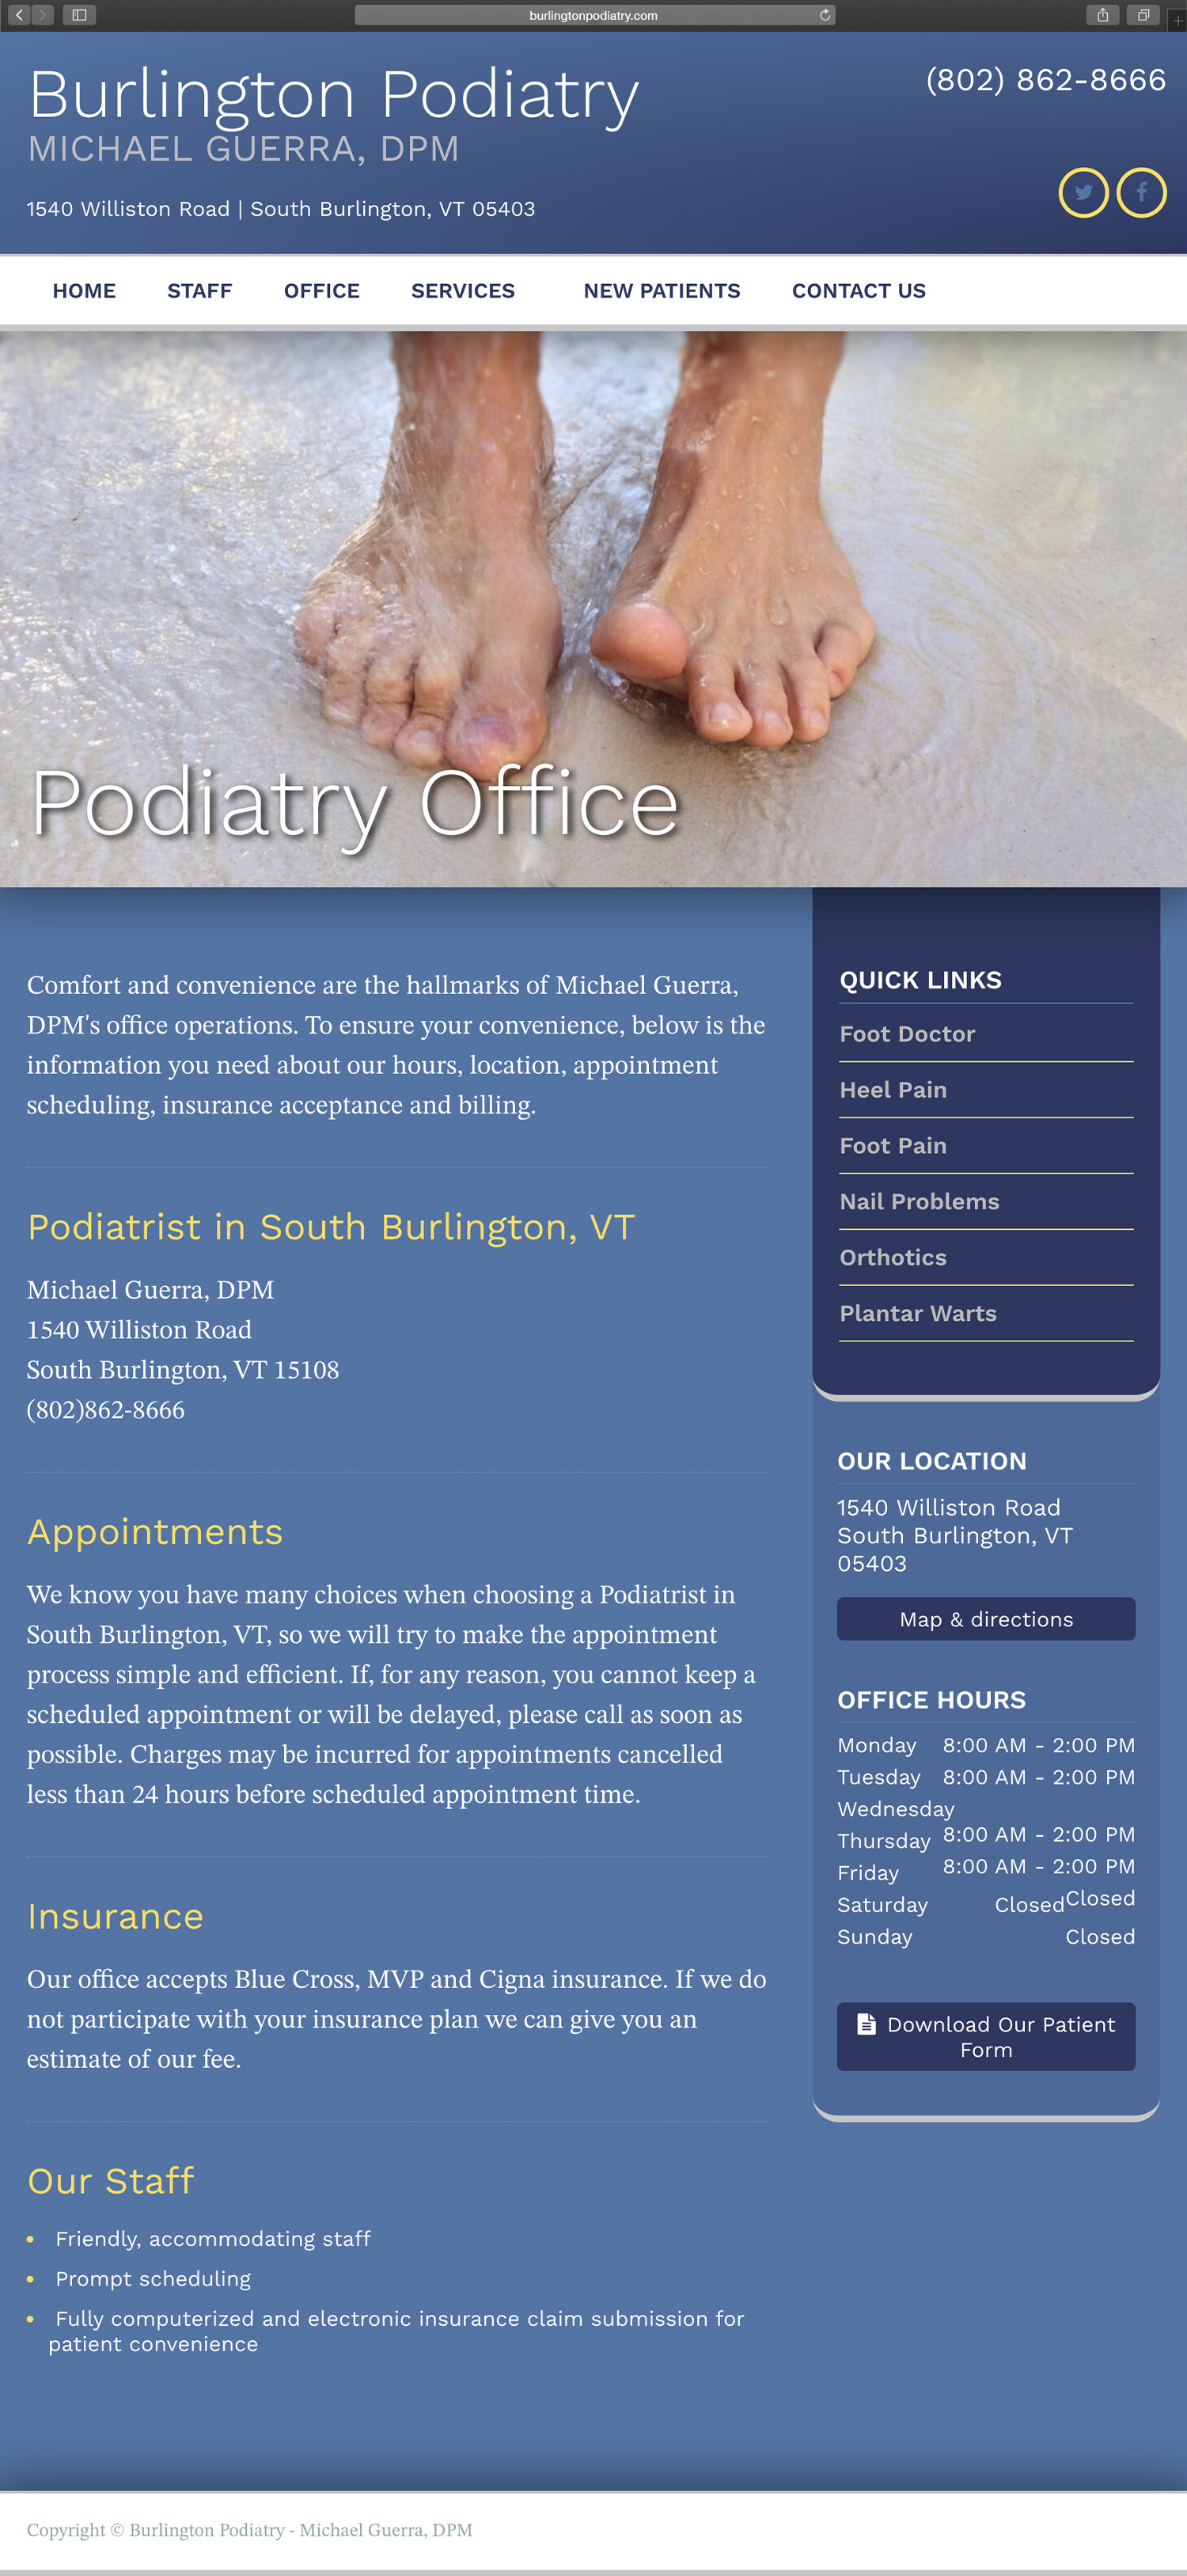 Website design and website development for Burlington Podiatry - secondary page view.